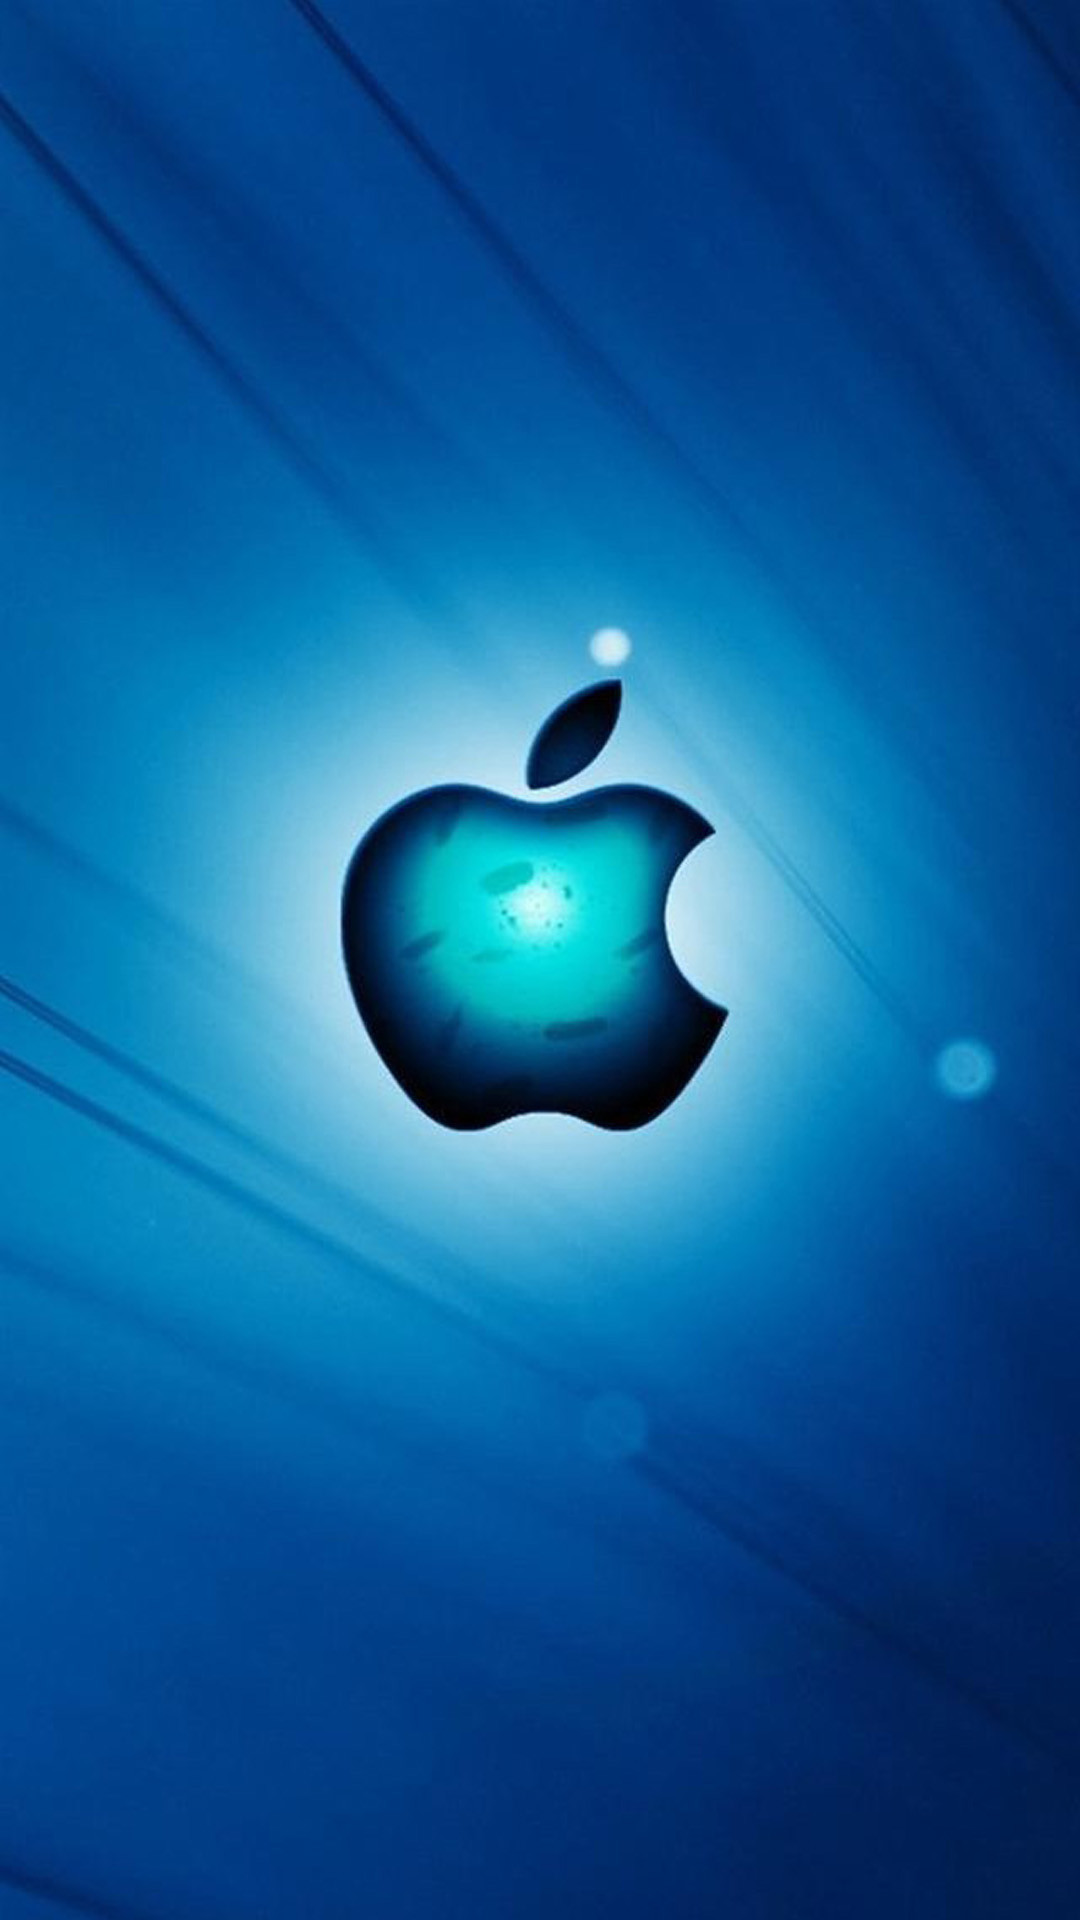 D Apple Logo iPhone Wallpaper iPod Wallpaper HD Free Download